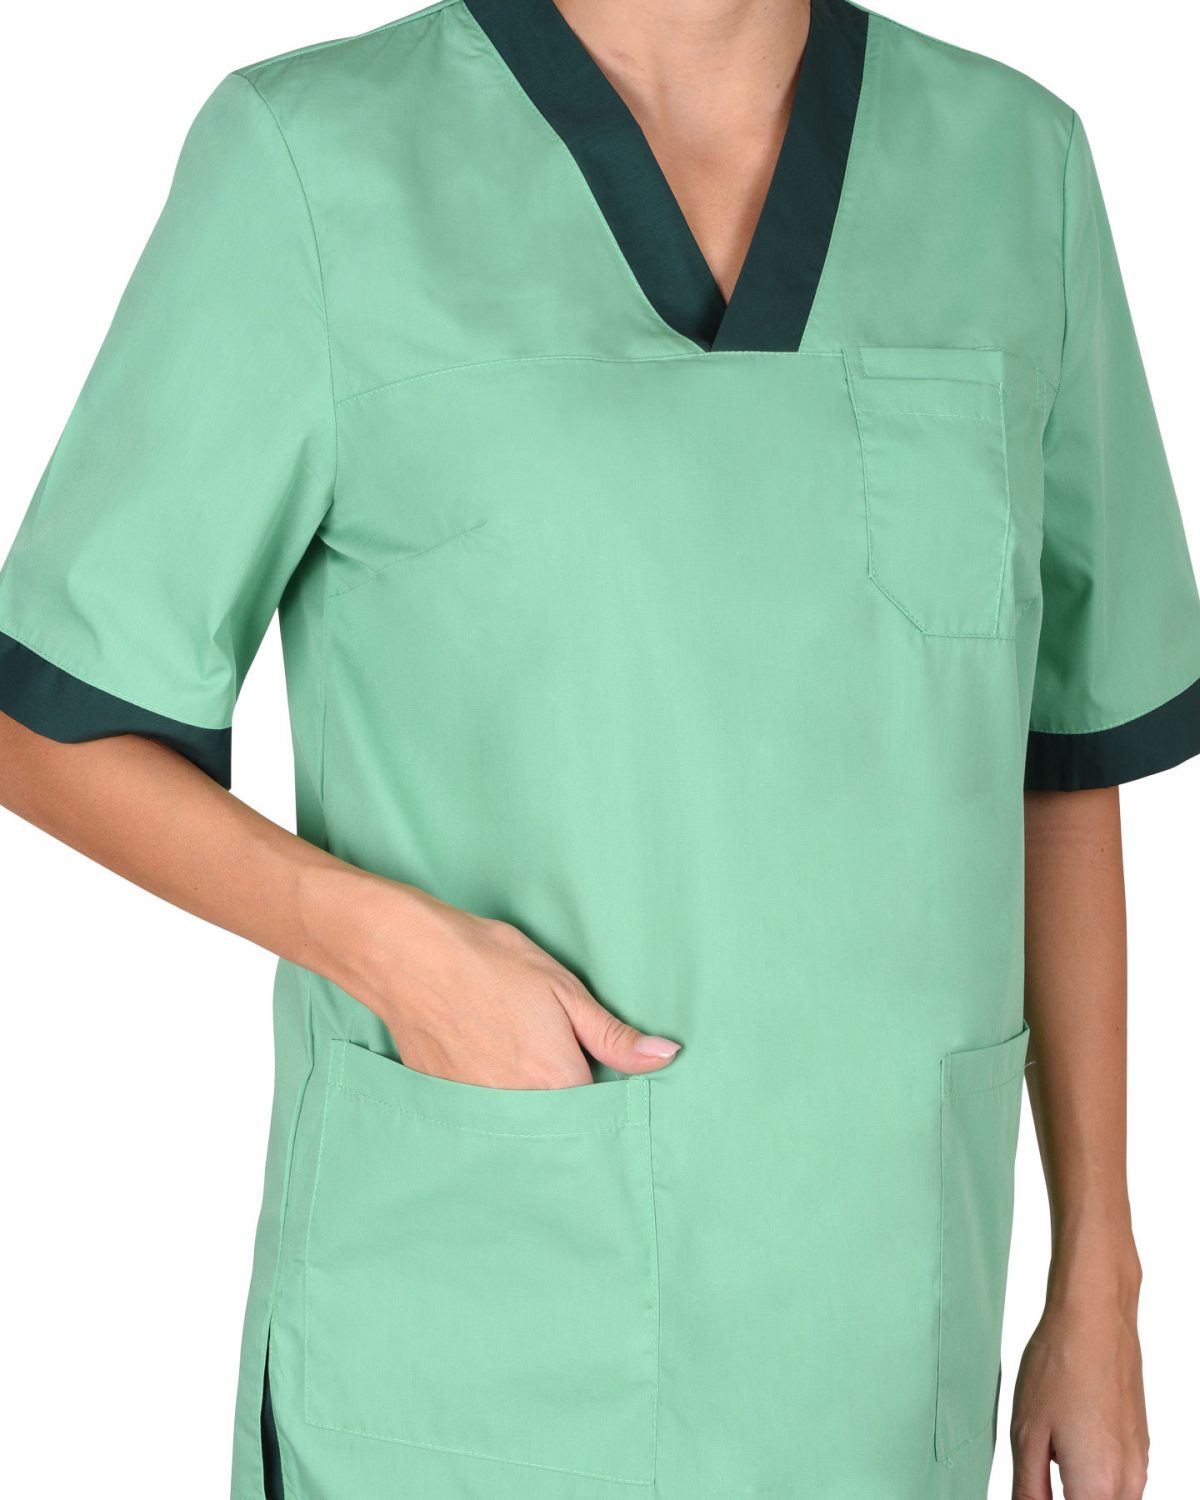 Медицинский костюм “СИРИУС-СОФИЯ” женский светлая мята с тёмно-зелёным (СТ) Артикул: 08100